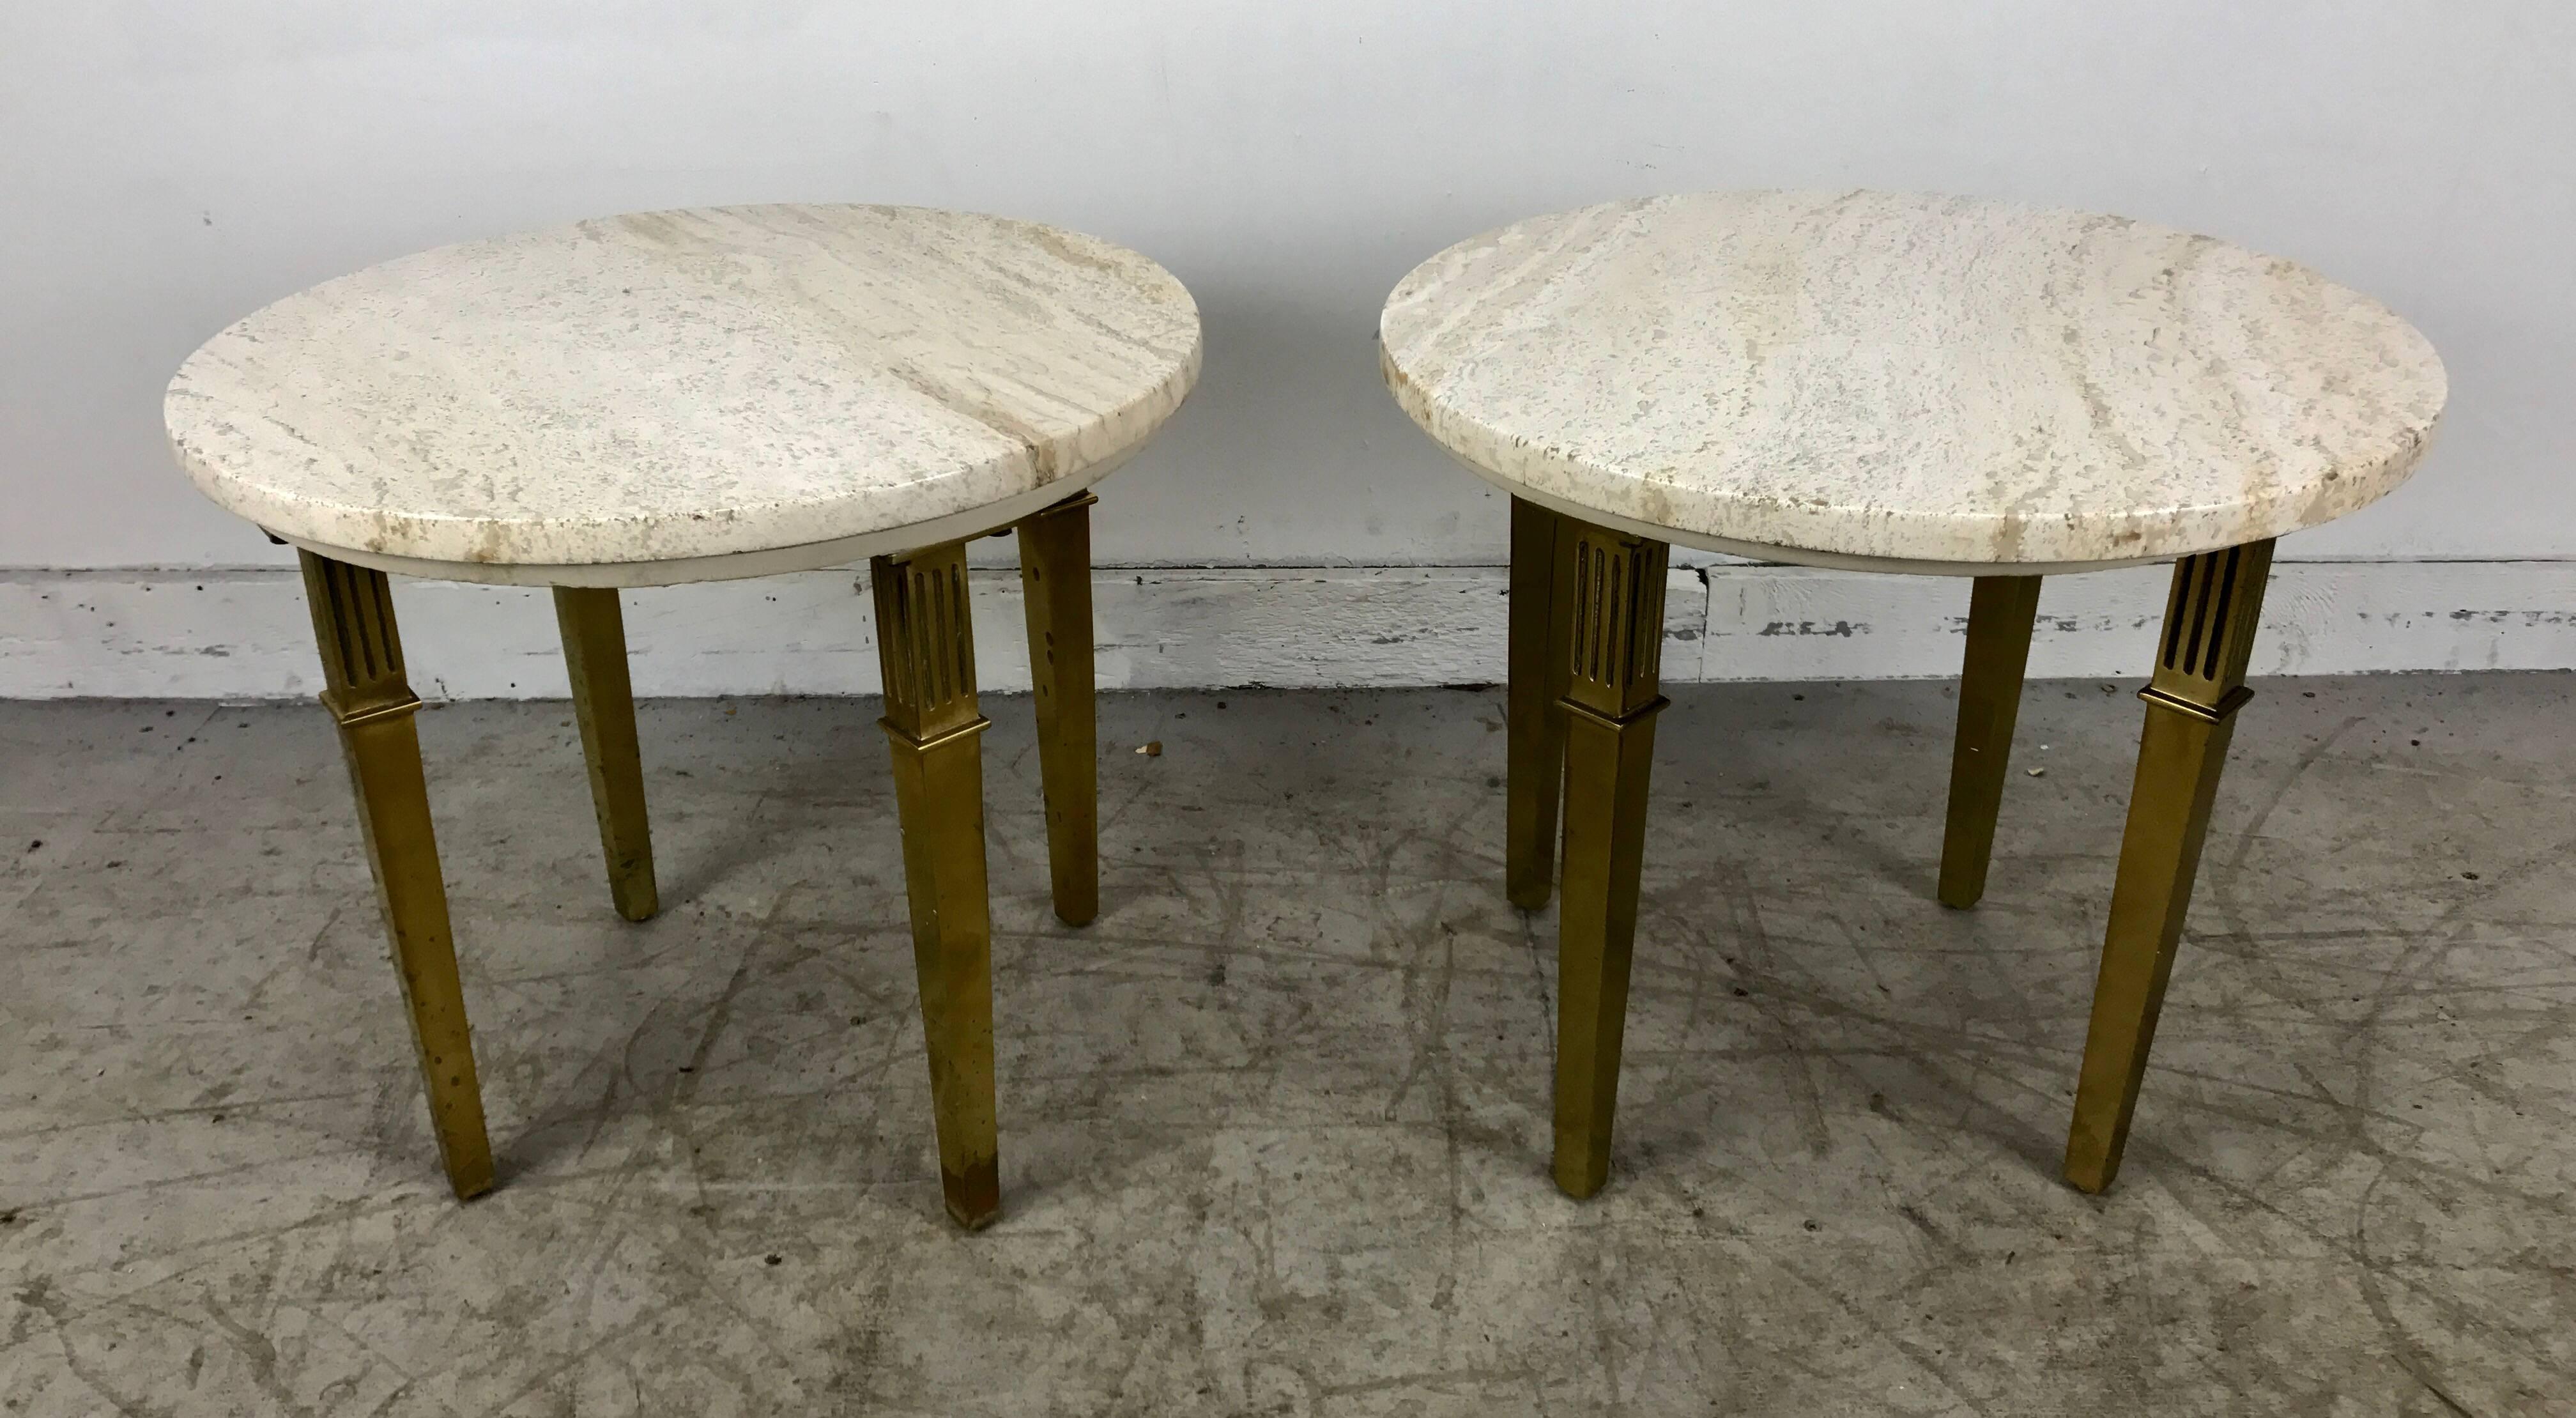 Stunning pair of Hollywood Regency occasional tables, beautiful Italian marble tops. Solid brass legs, fluted capital design. Sleek, simple, elegant.